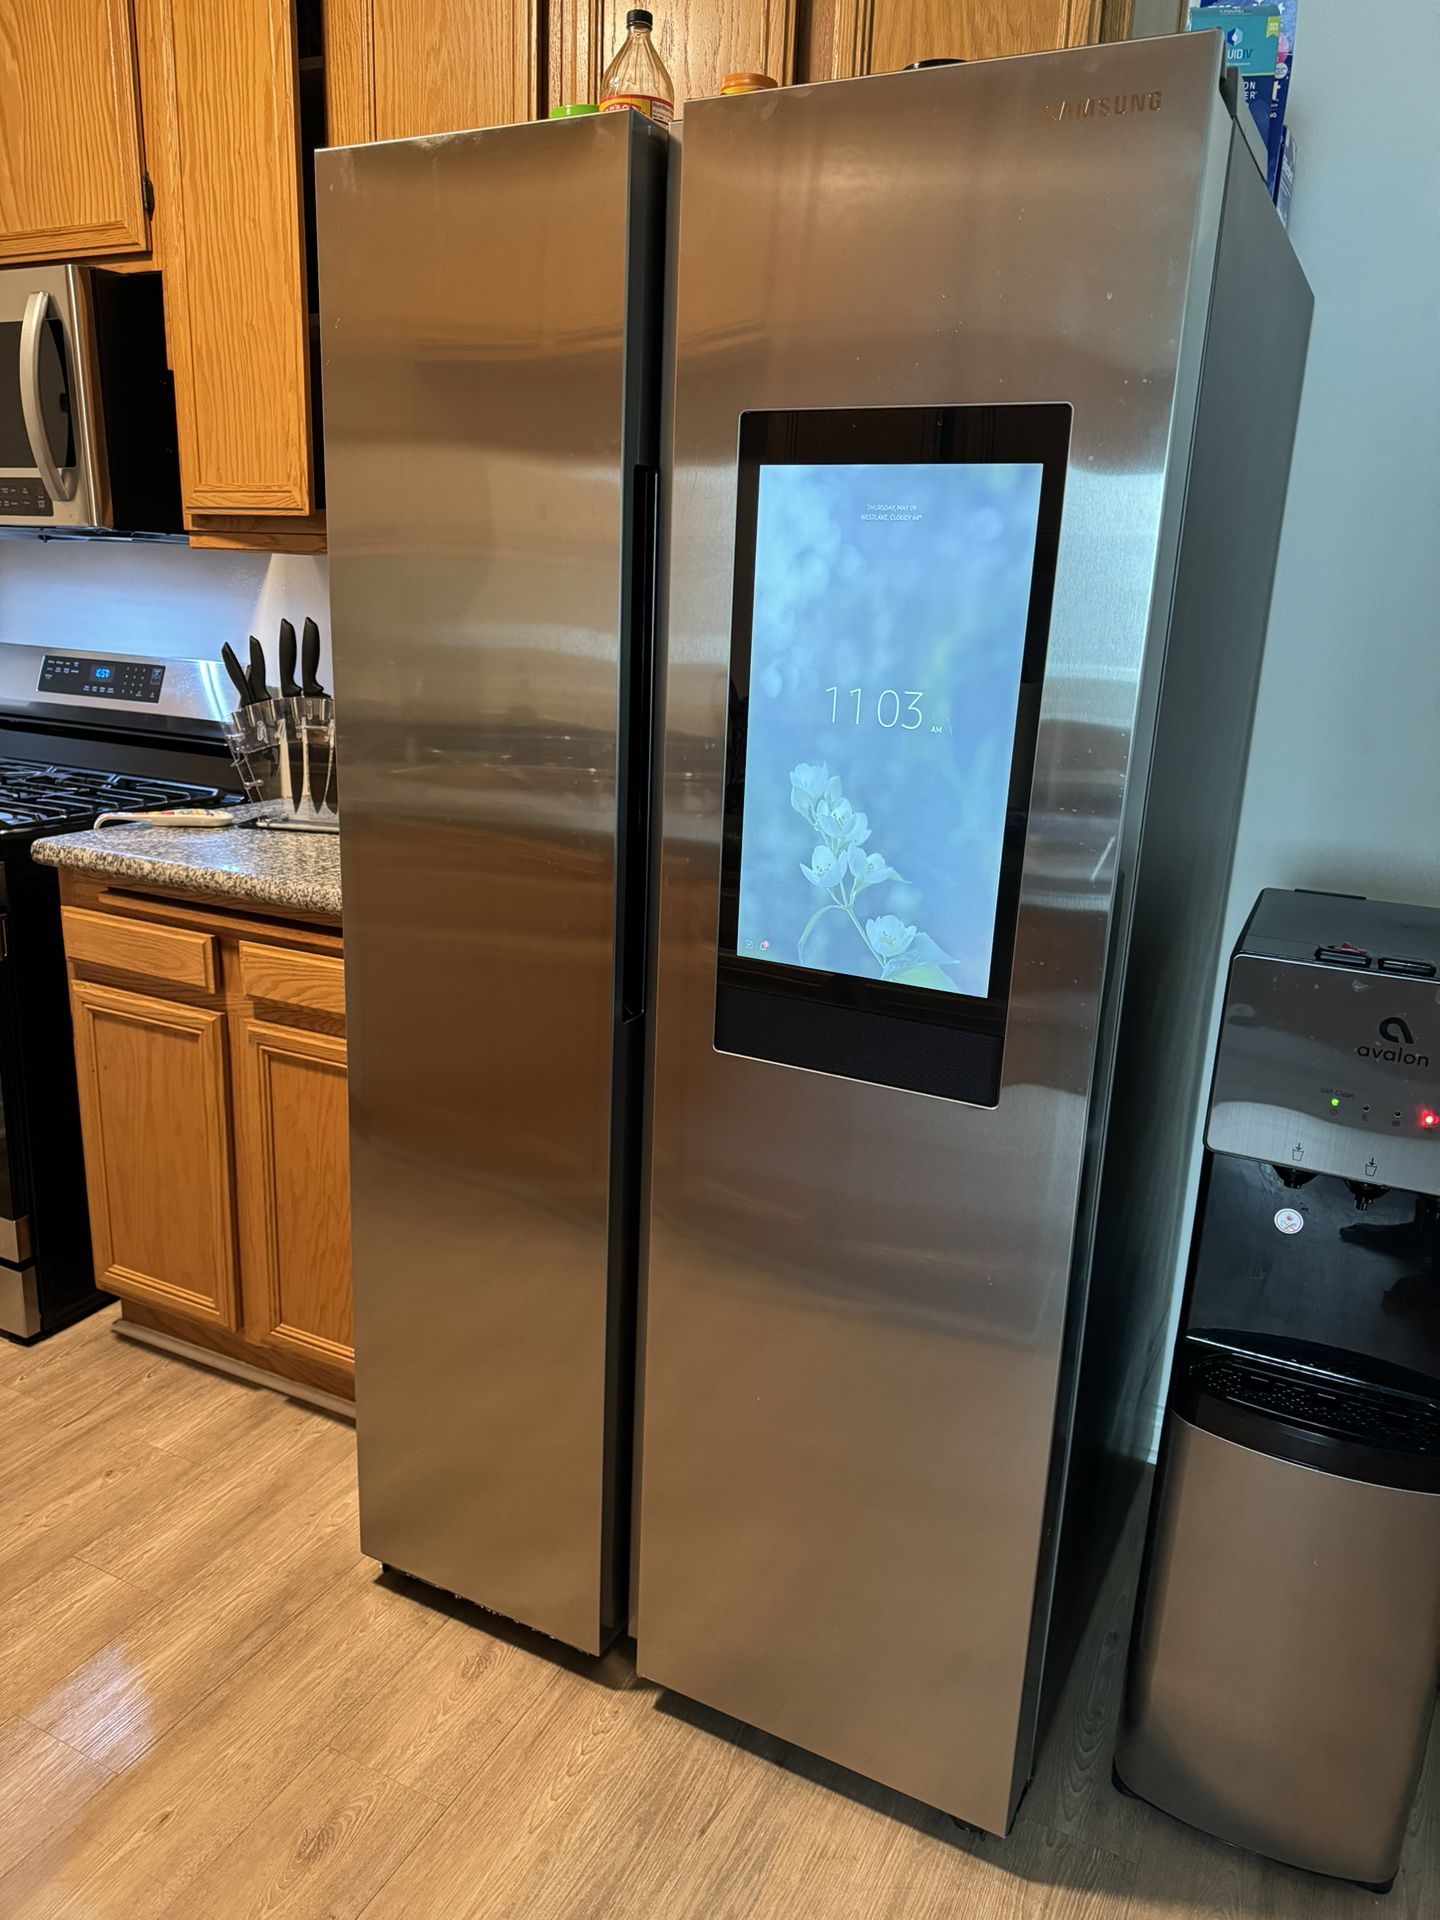 Stainless Steel Samsung Refrigerator W/ Built In Tv